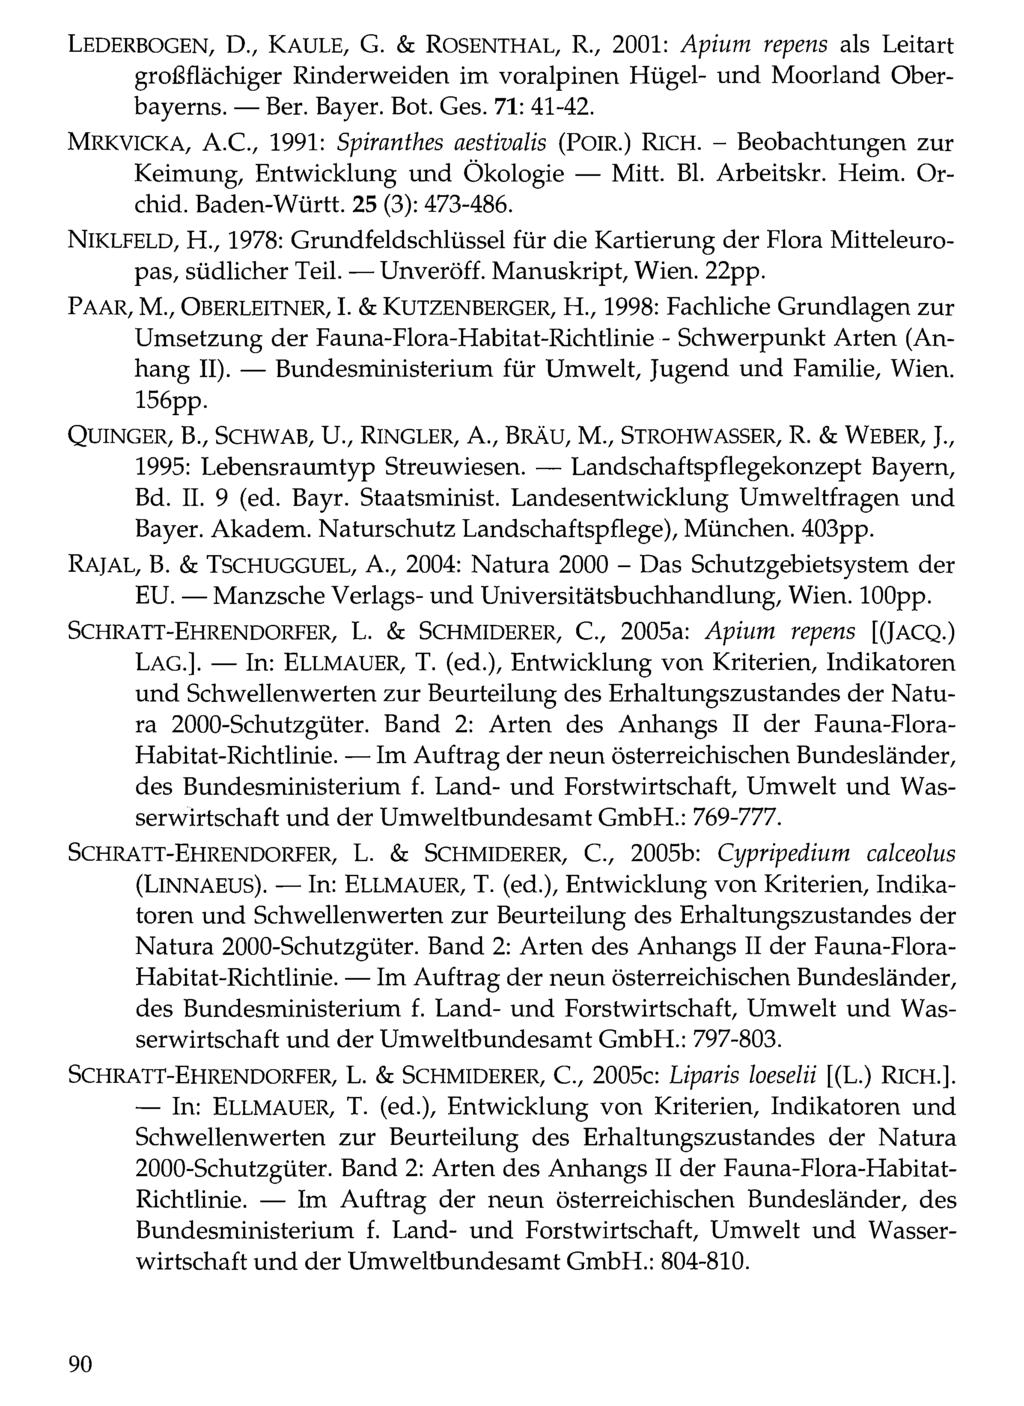 Lederbogen, D., Verlag Kaule, Alexander Just: G. Dorfbeuern & Rosenthal, - Salzburg - Brüssel; download R., 2001: unter www.biologiezentrum.